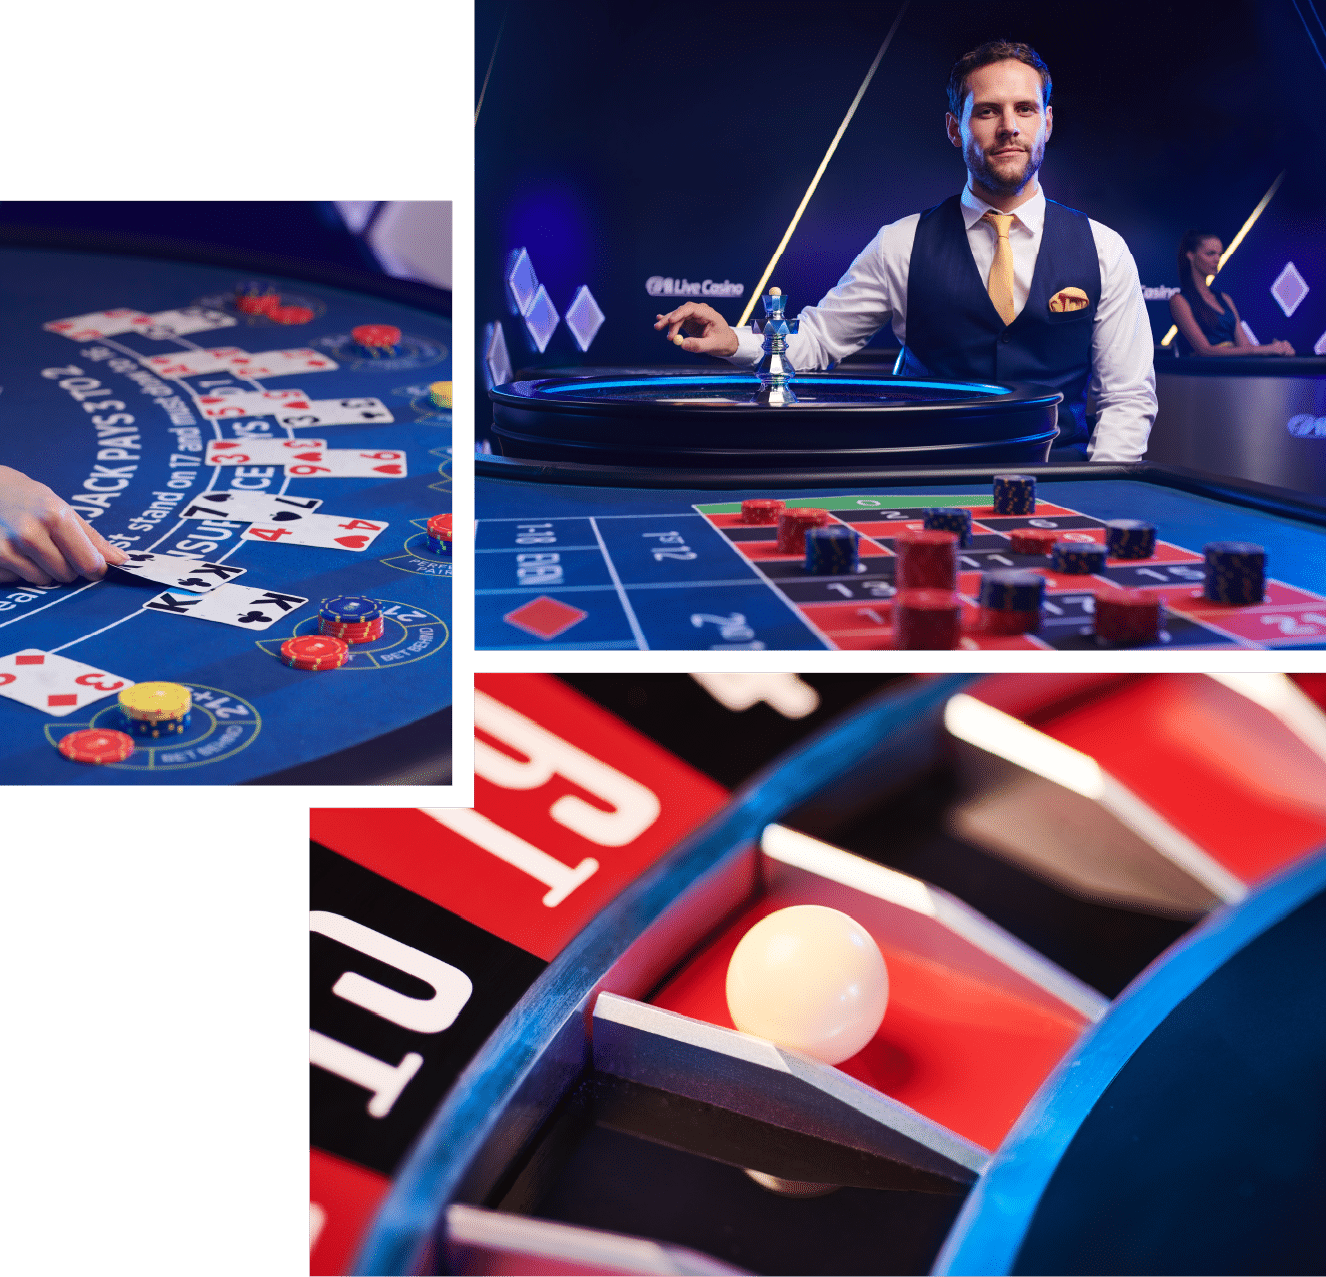 croupier - blackjack table - close up of roulette wheel